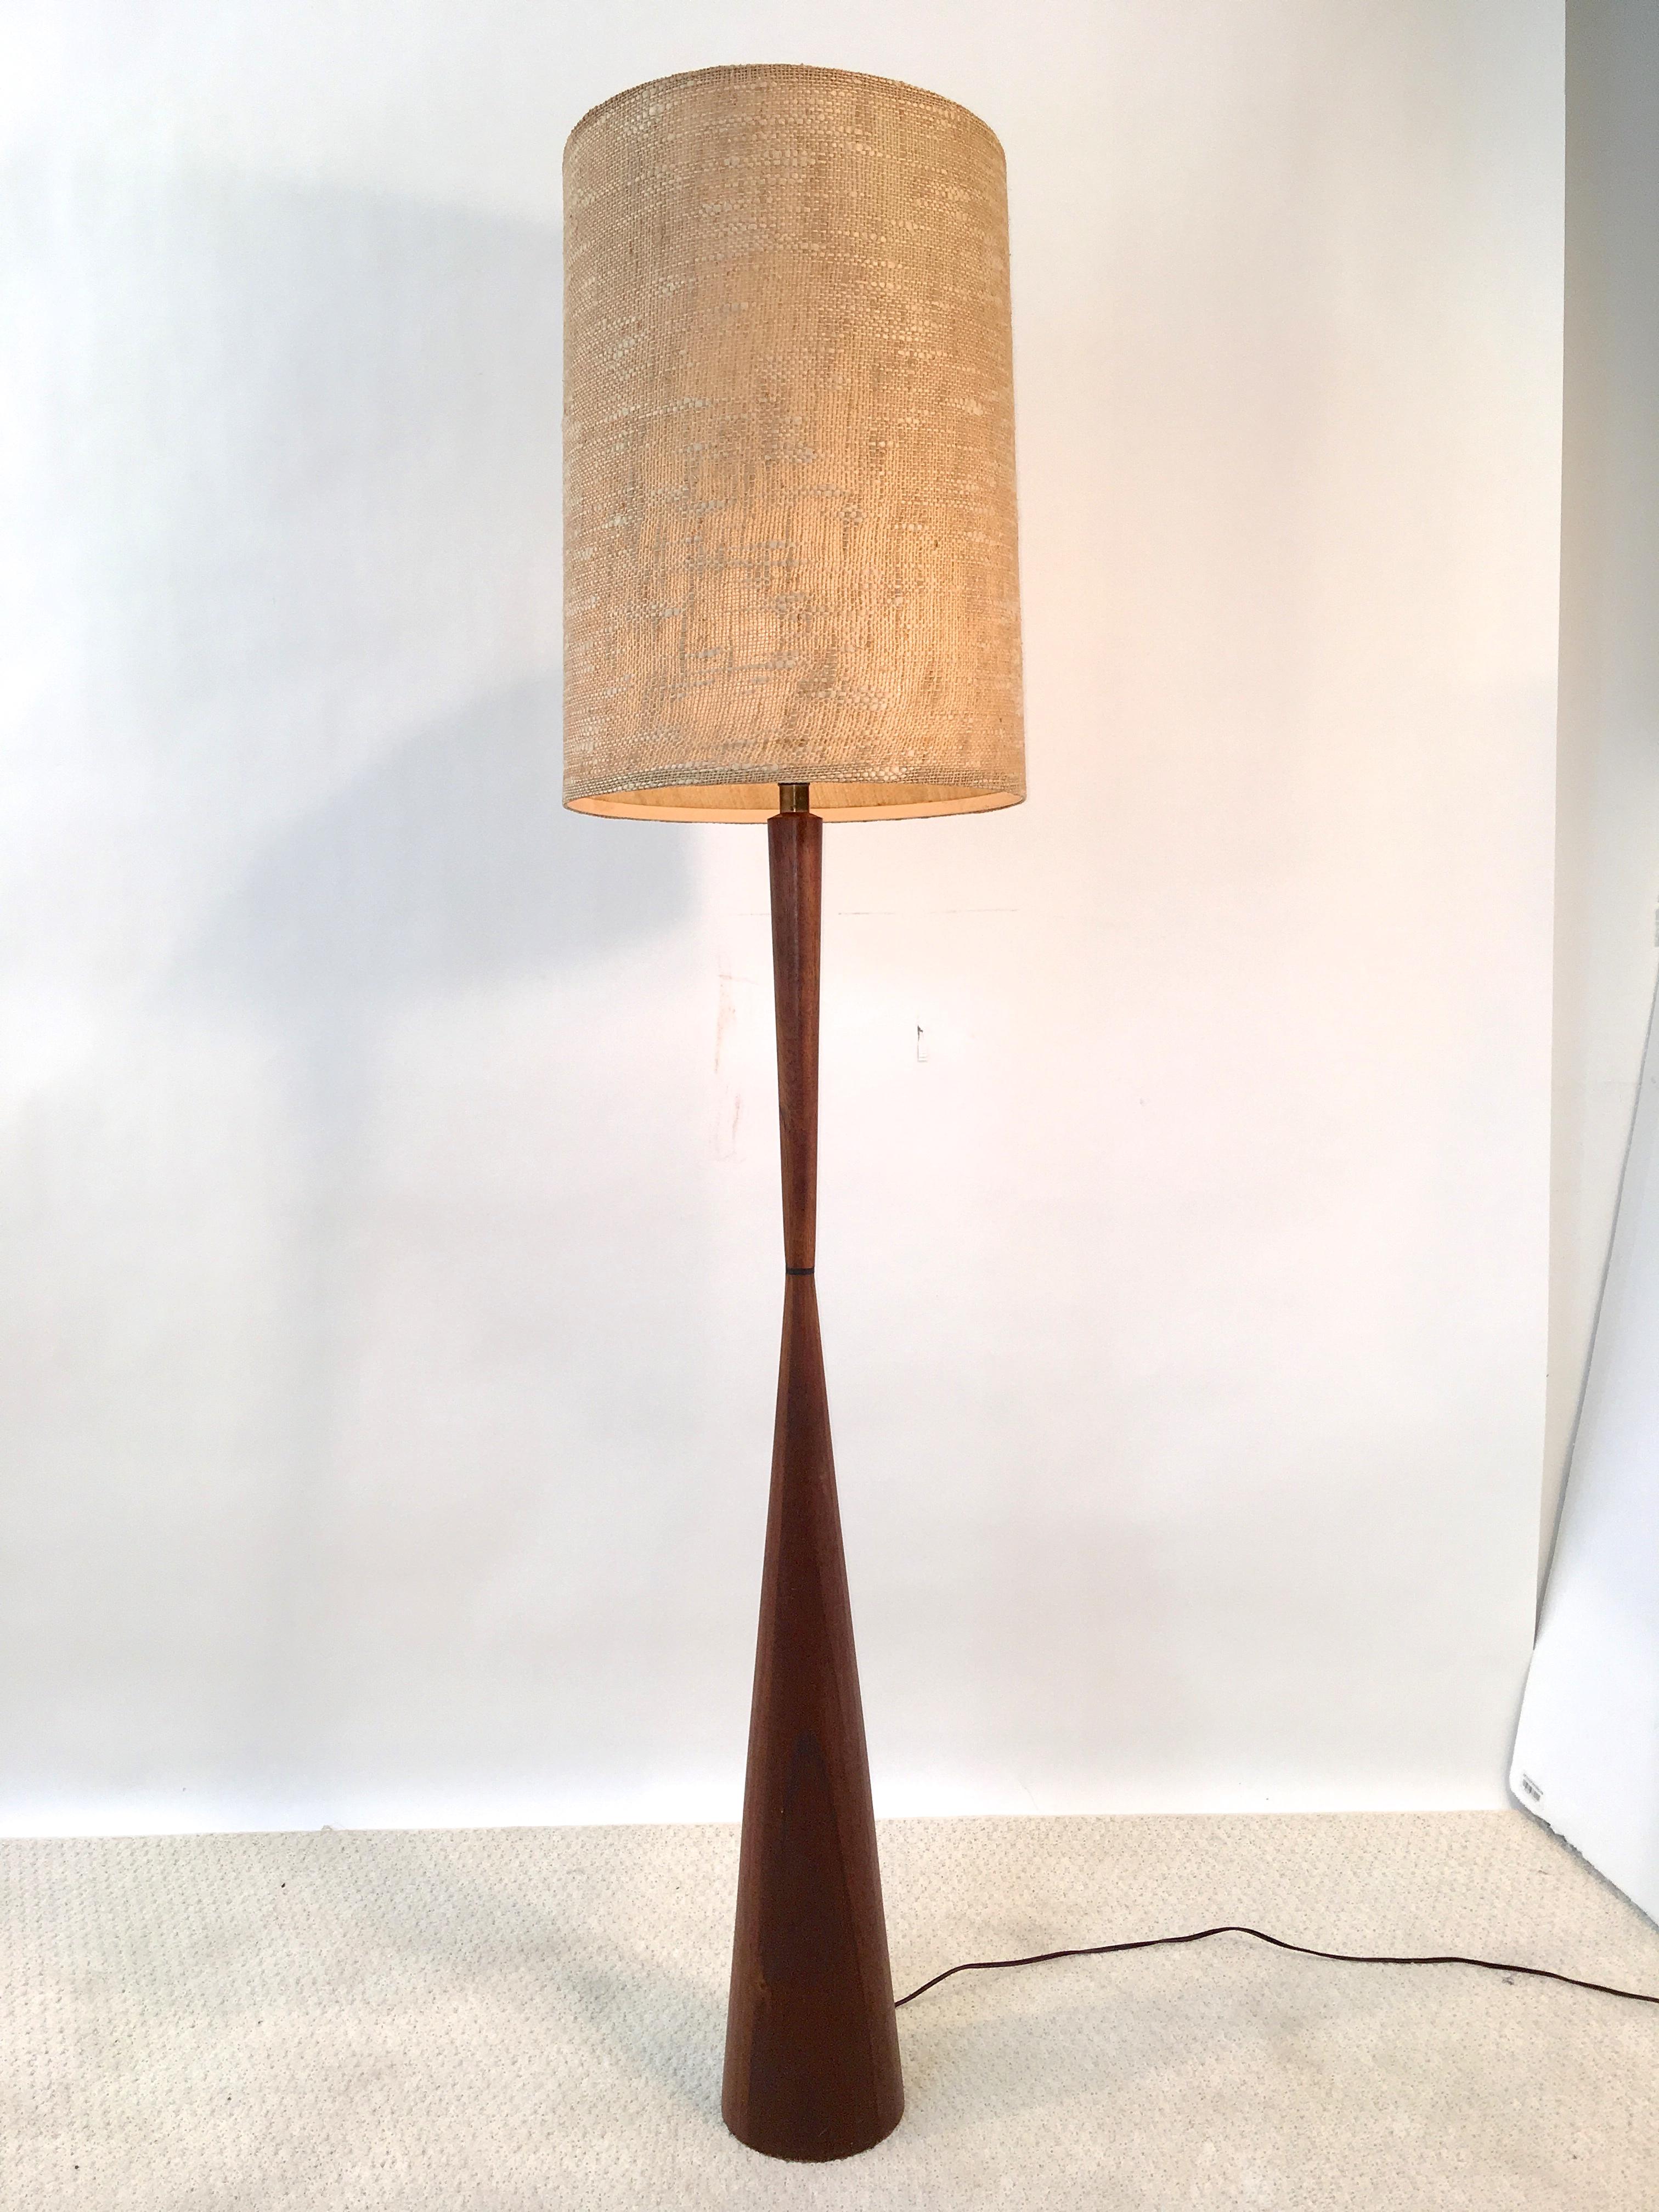 Walnut Hourglass Floor Lamp by Raymond Pfennig for Zina Lamp Co. 1